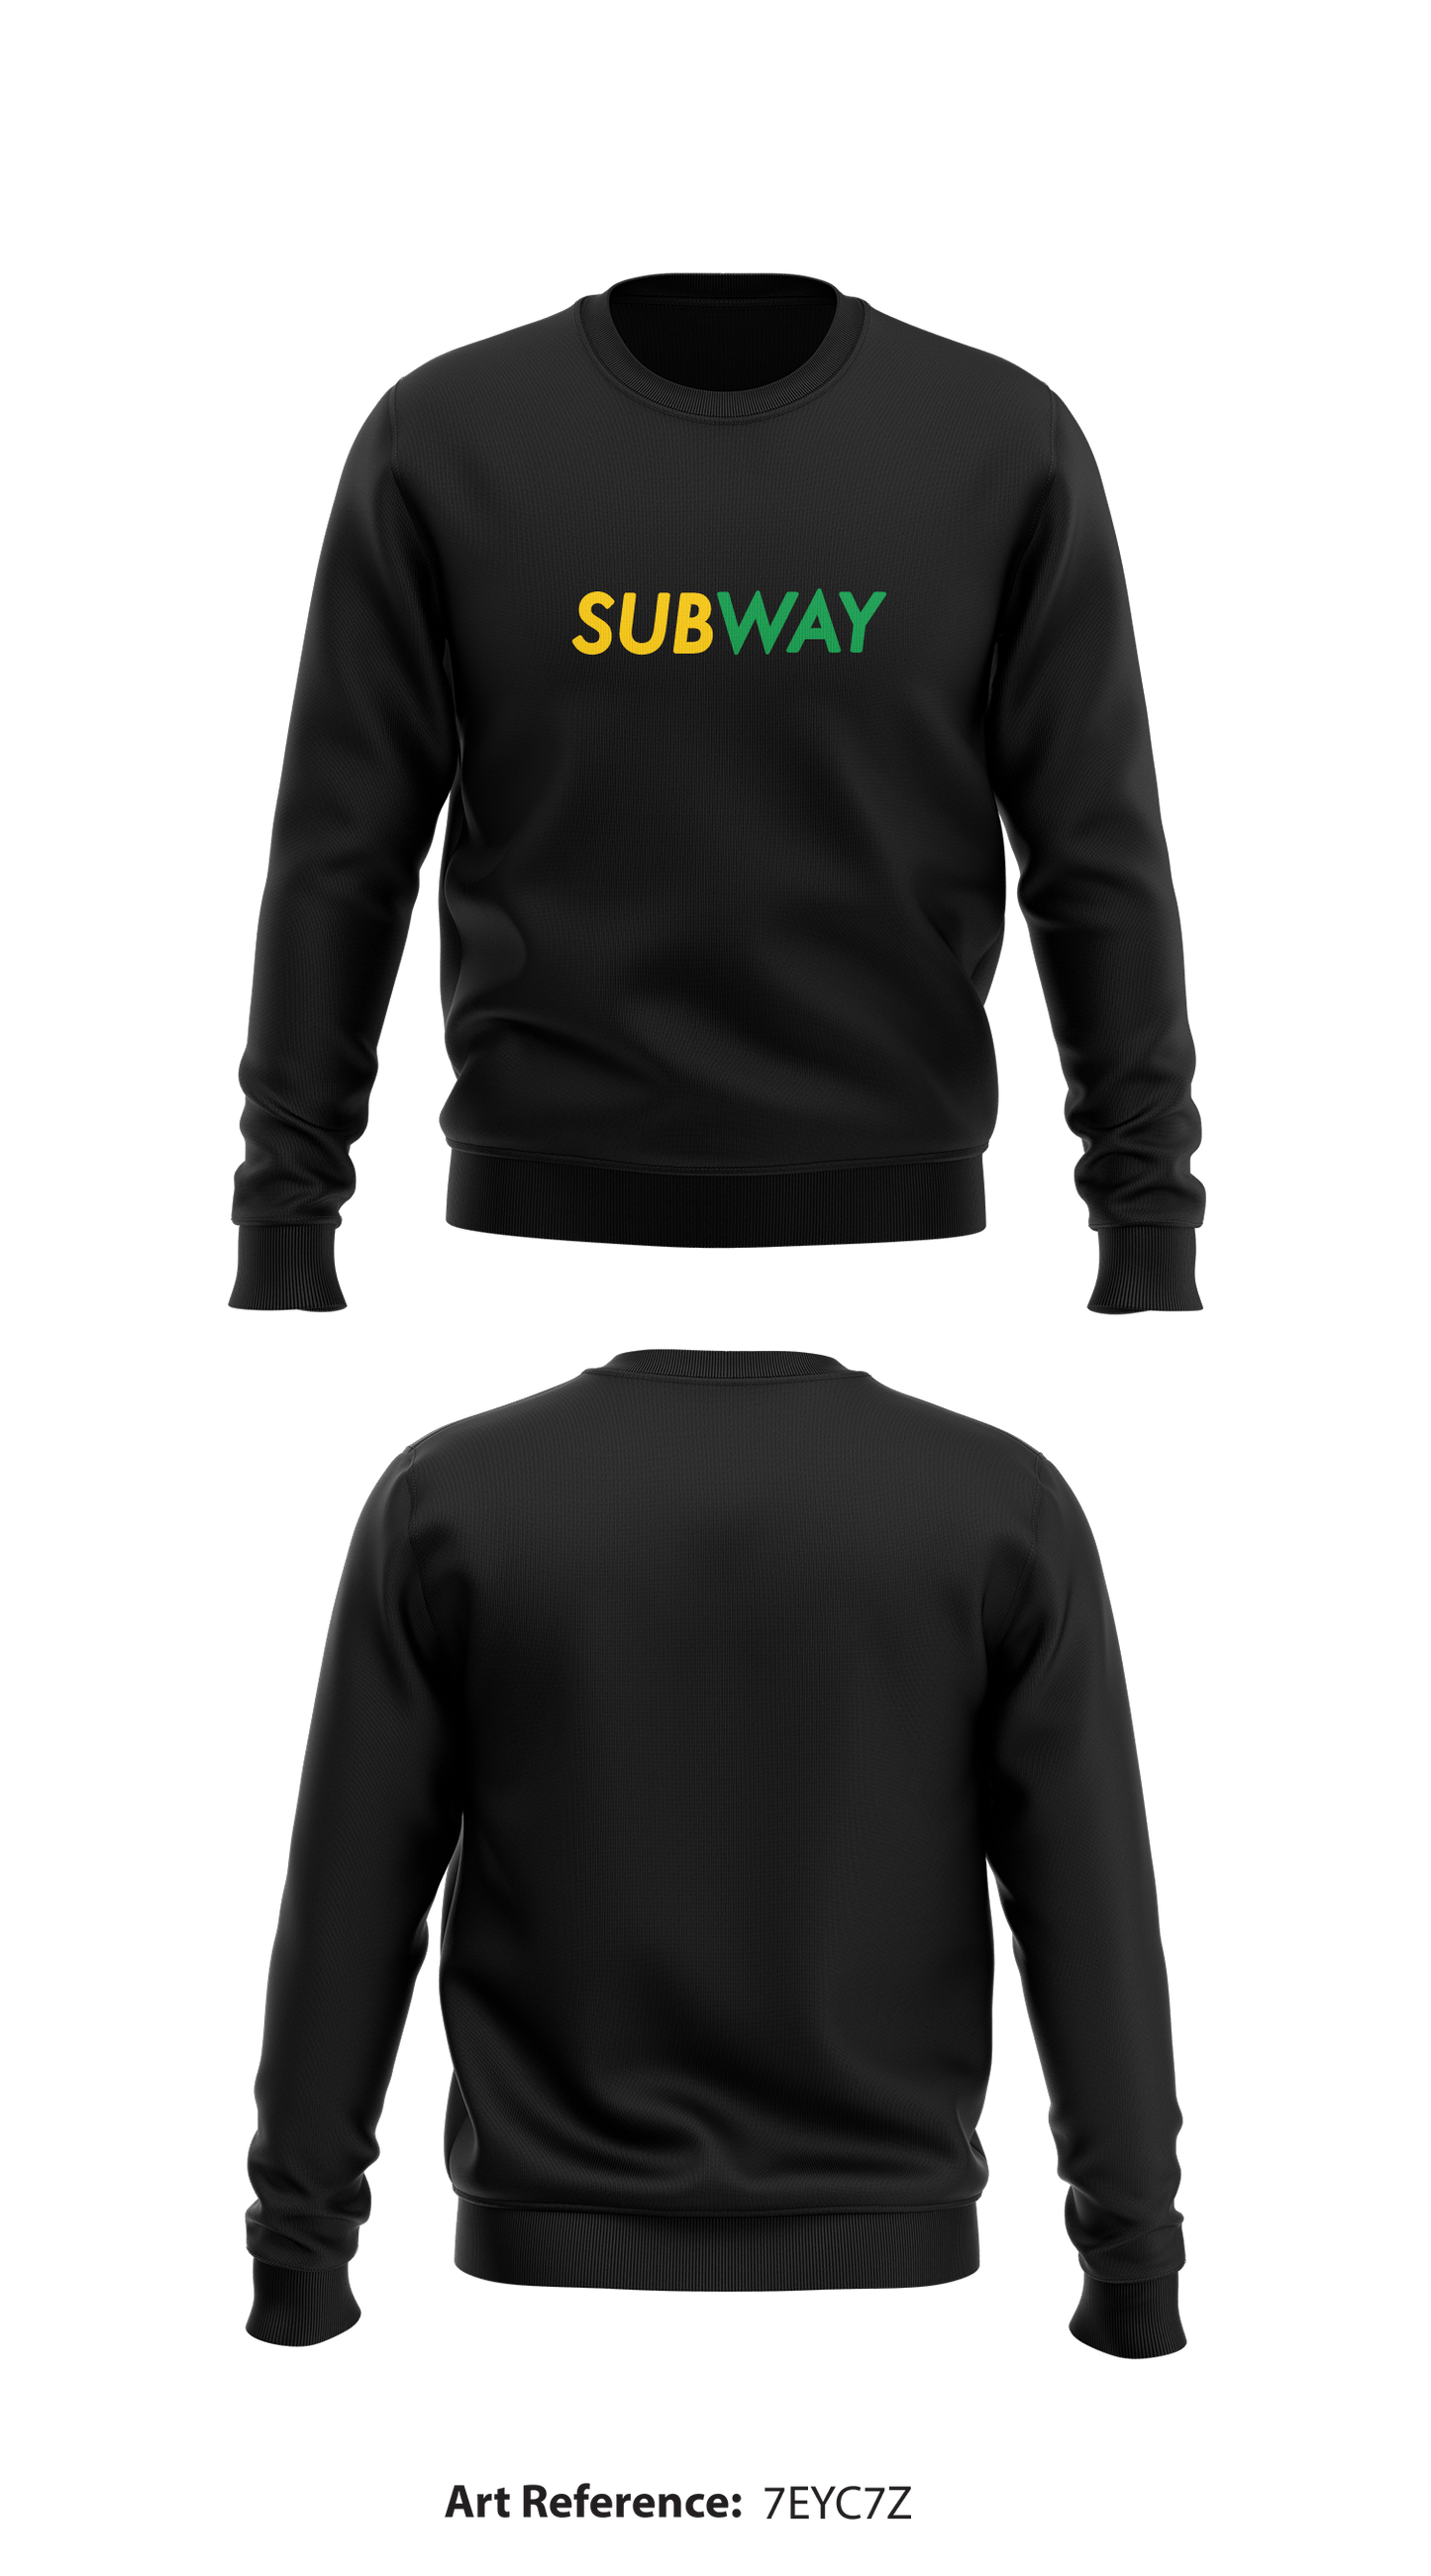 Subway Store 1 Core Men's Crewneck Performance Sweatshirt - 7eYC7z